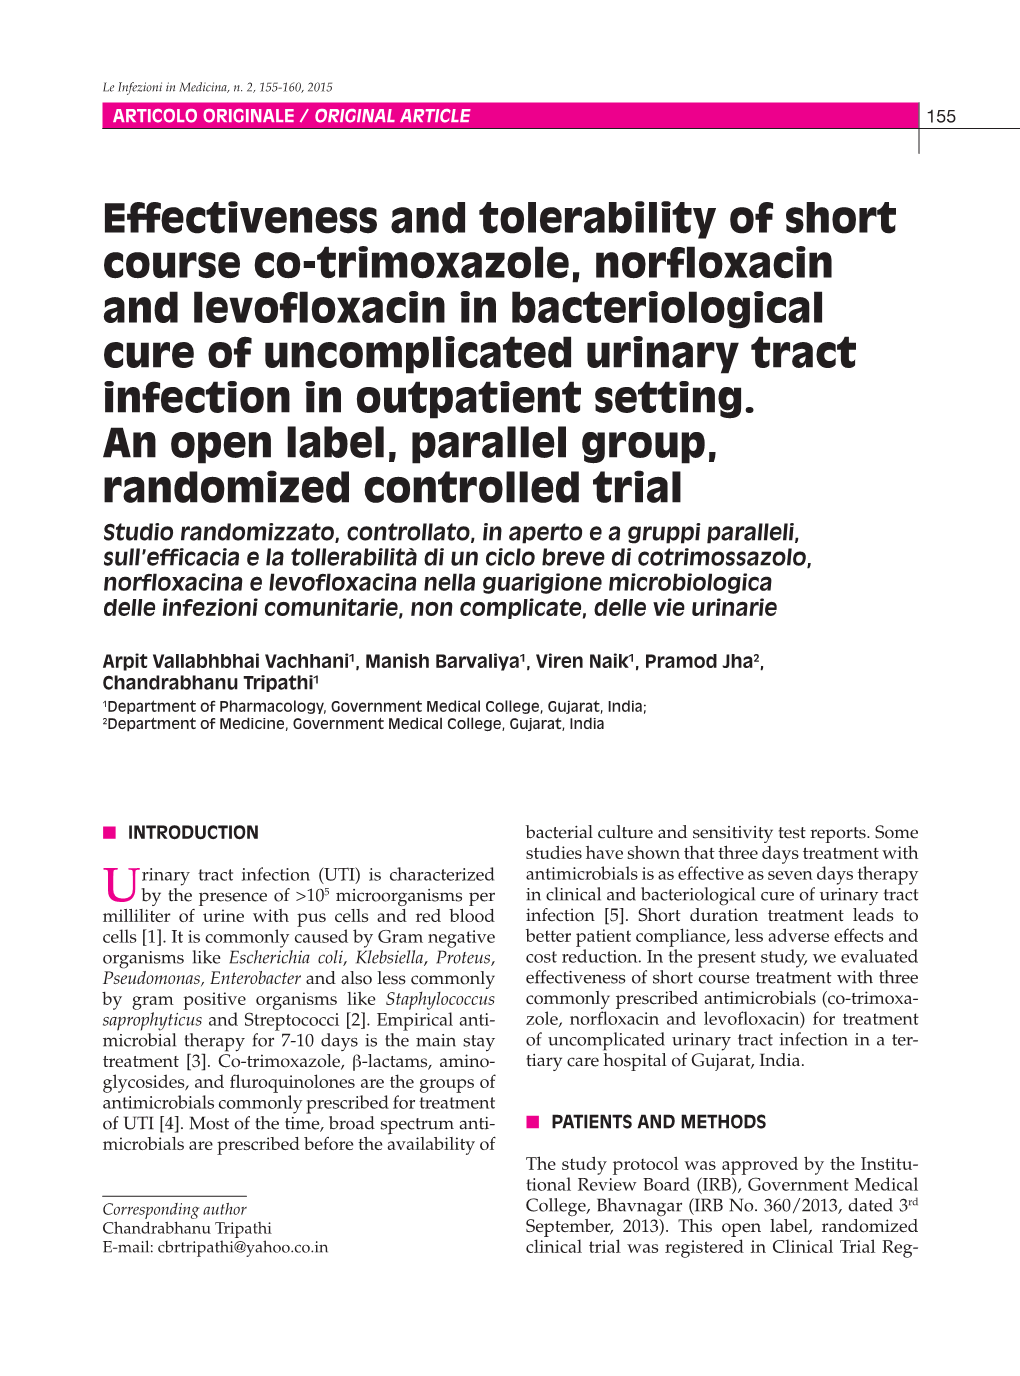 Effectiveness and Tolerability of Short Course Co-Trimoxazole, Norfloxacin